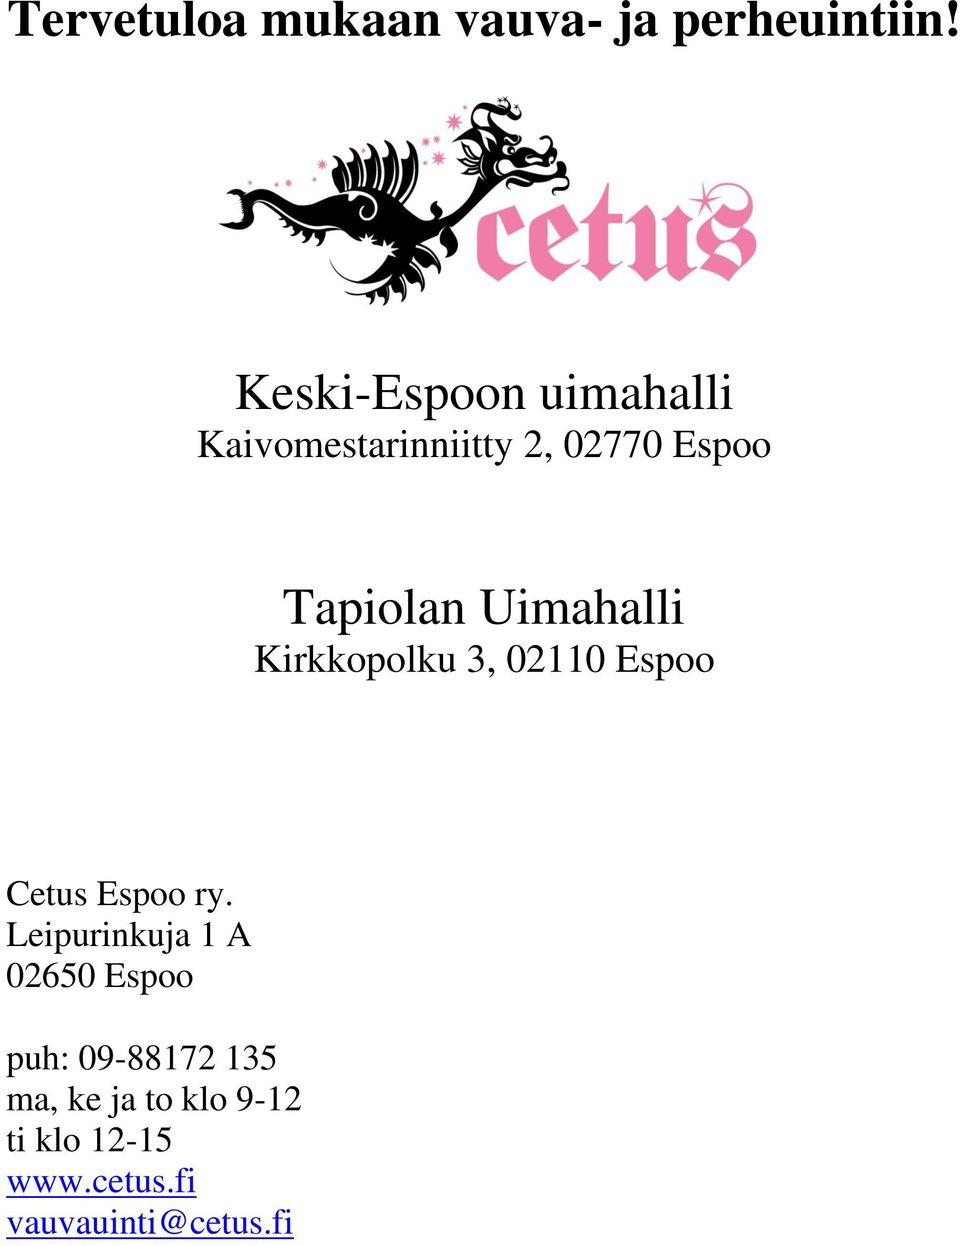 Espoo Tapiolan Uimahalli Kirkkopolku 3, 02110 Espoo Cetus Espoo ry.